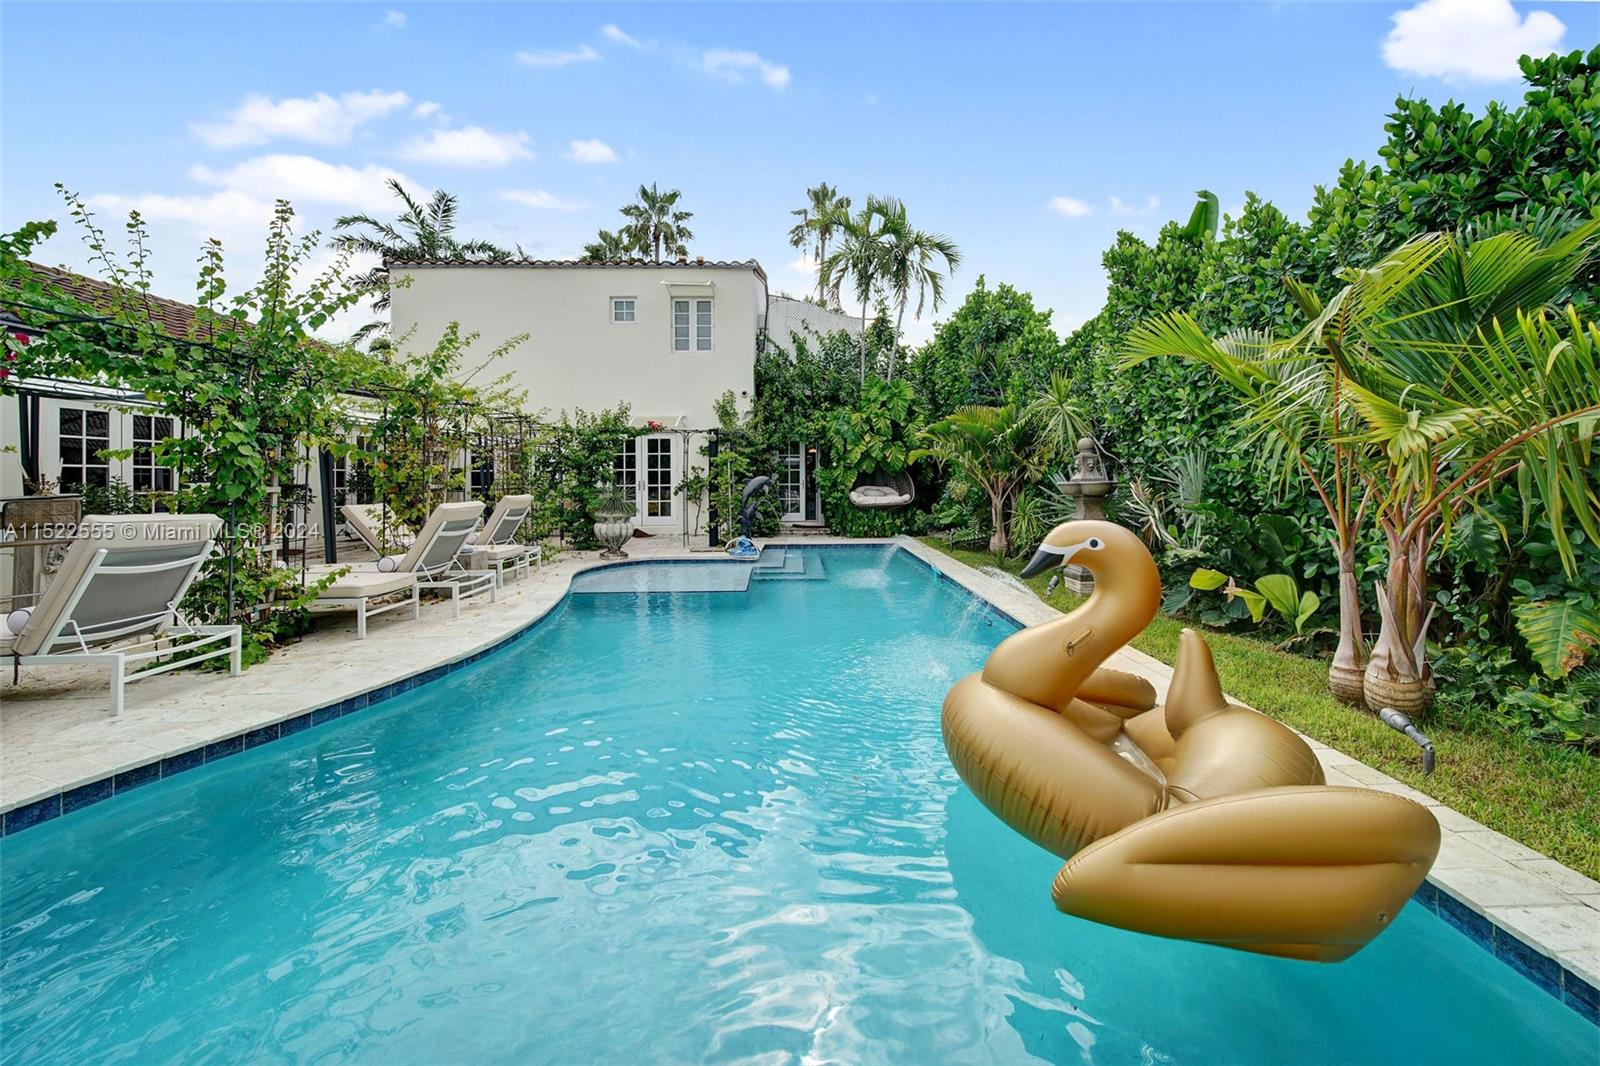 Property for Sale at 1244 Michigan Ave, Miami Beach, Miami-Dade County, Florida - Bedrooms: 5 
Bathrooms: 3  - $3,795,000